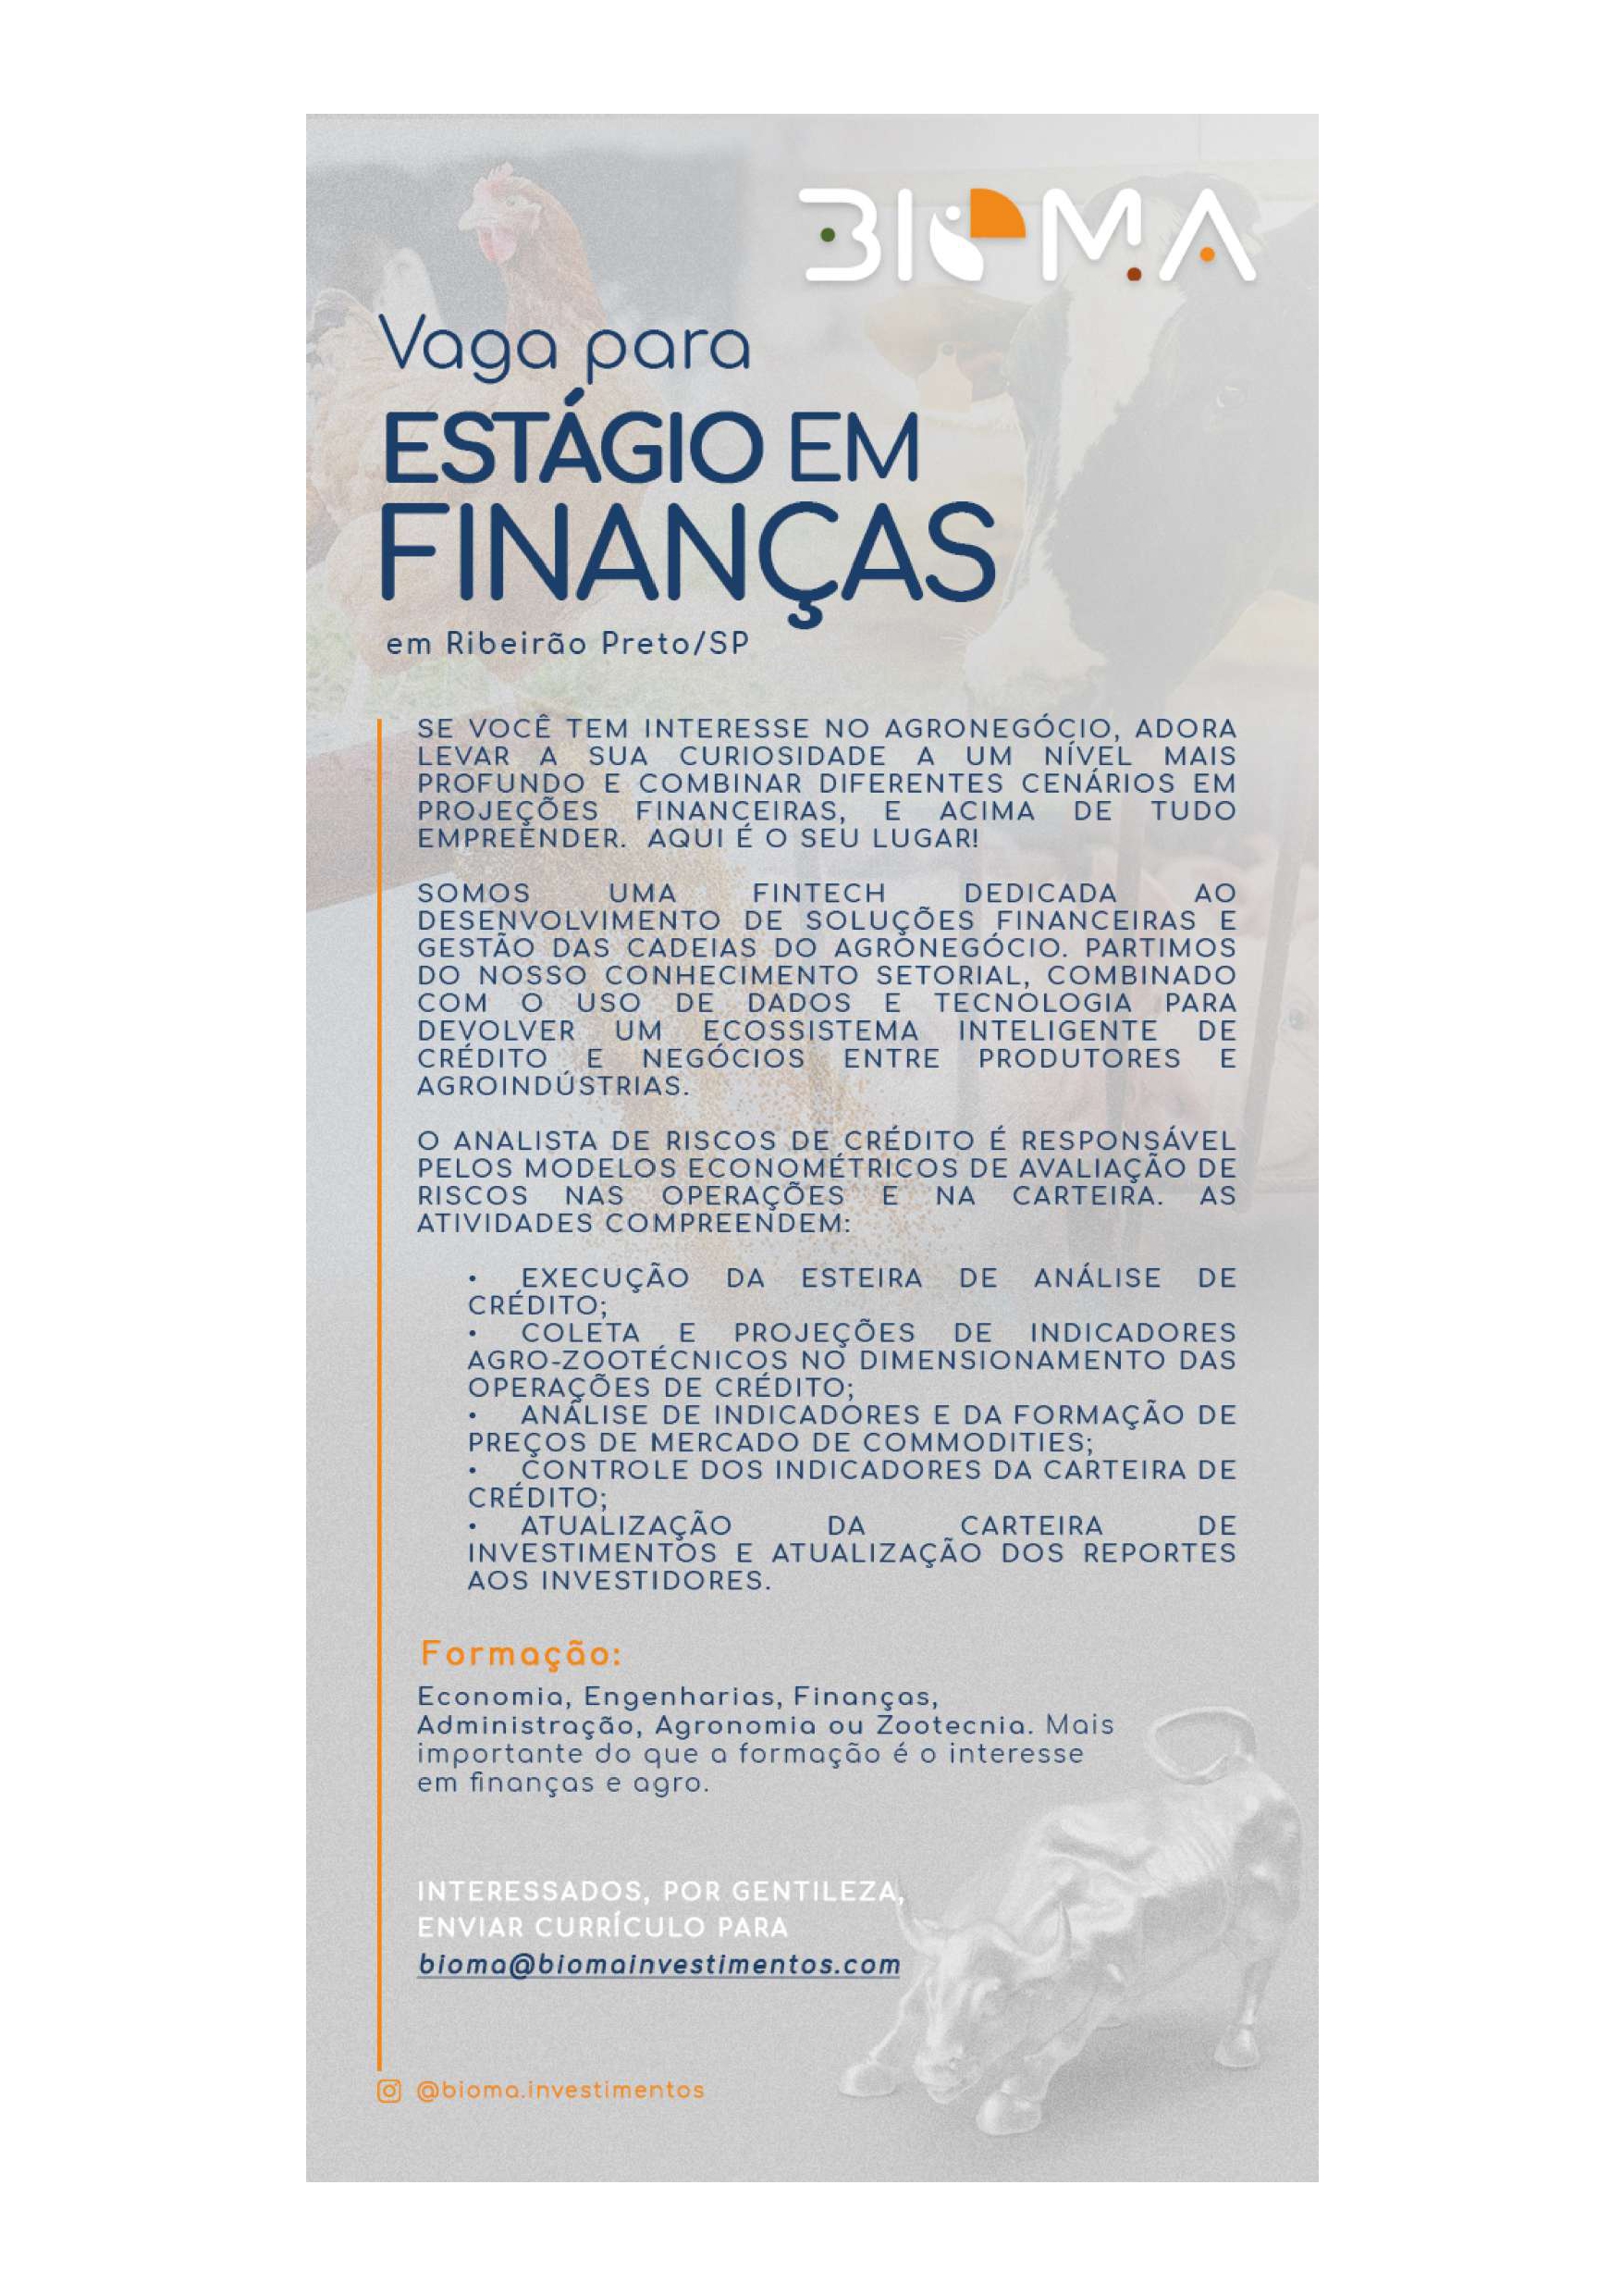 Bioma_Finanças_compressed_page-0001.jpg